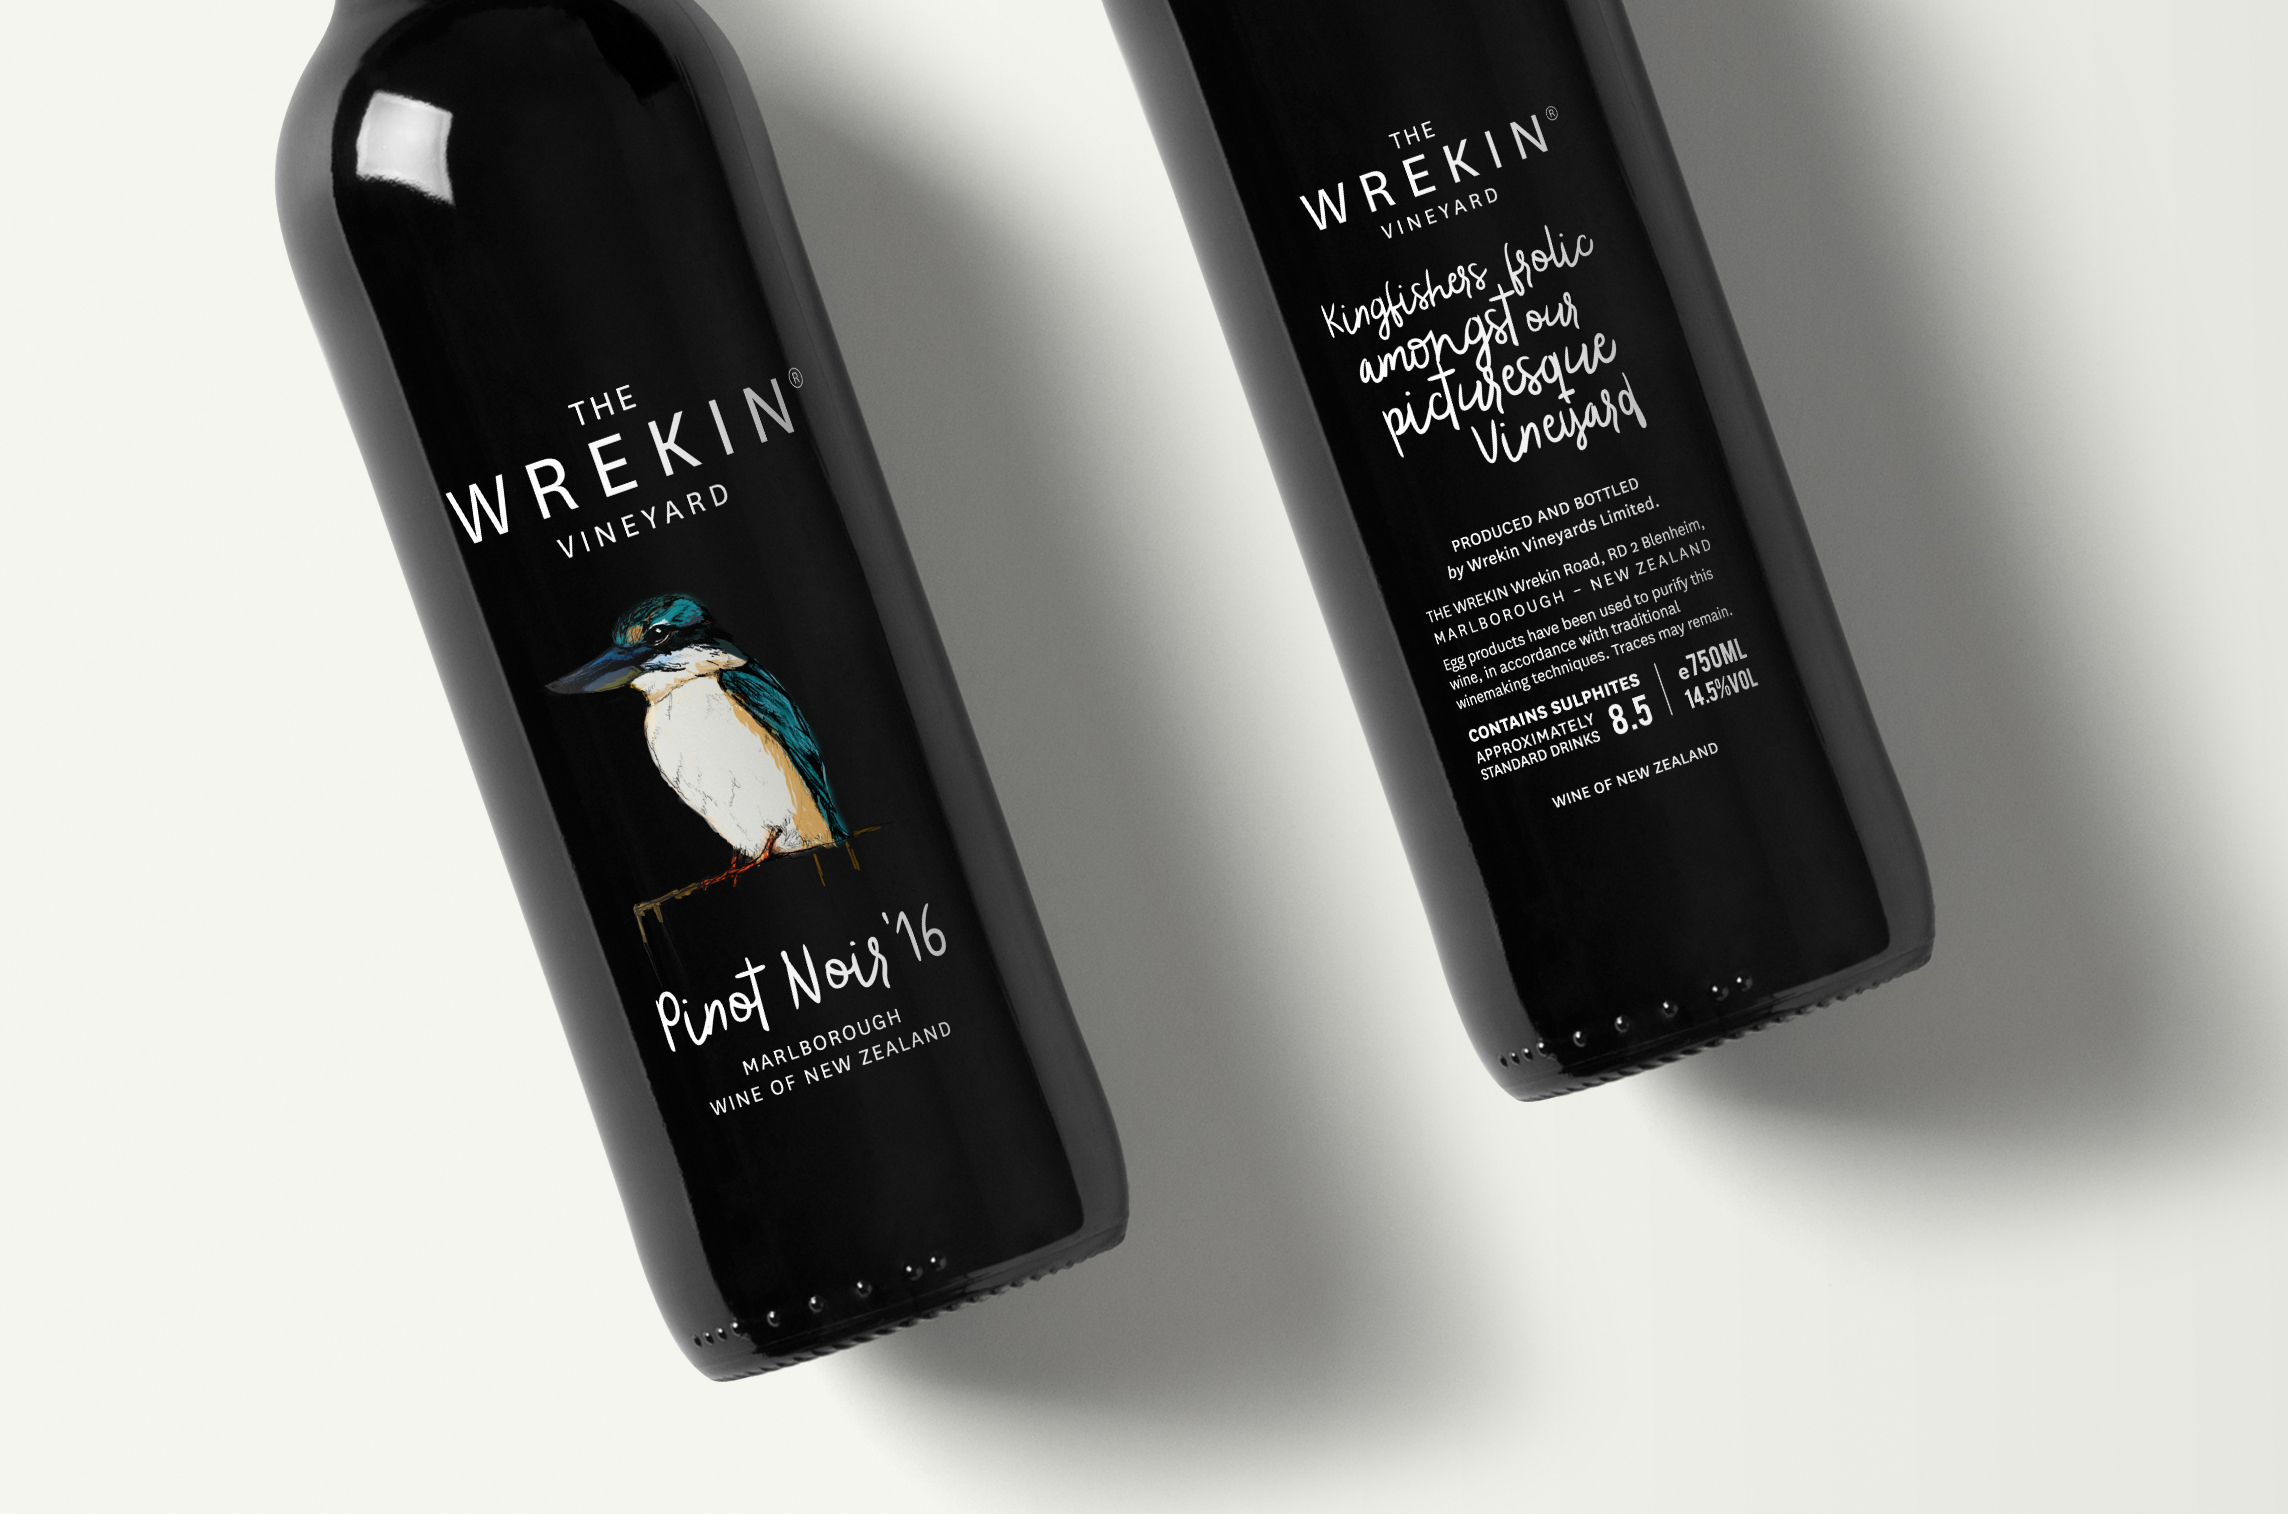 the-wrekin-vineyard-bottle-angle-2288px